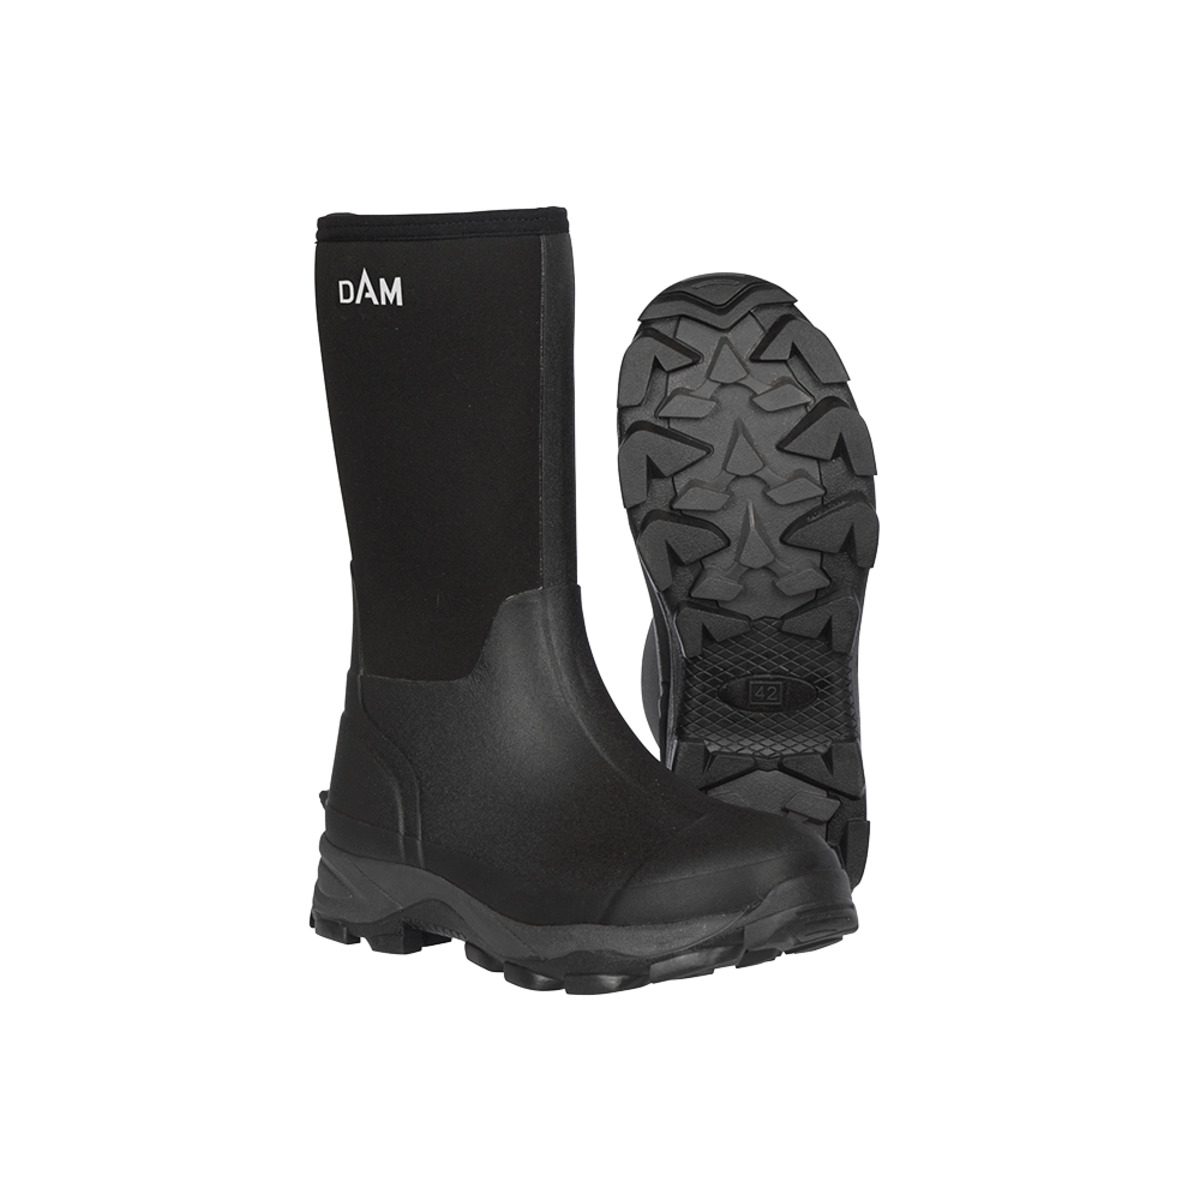 Dam Tira Boots Rubber/neoprene - 46/11 BLACK